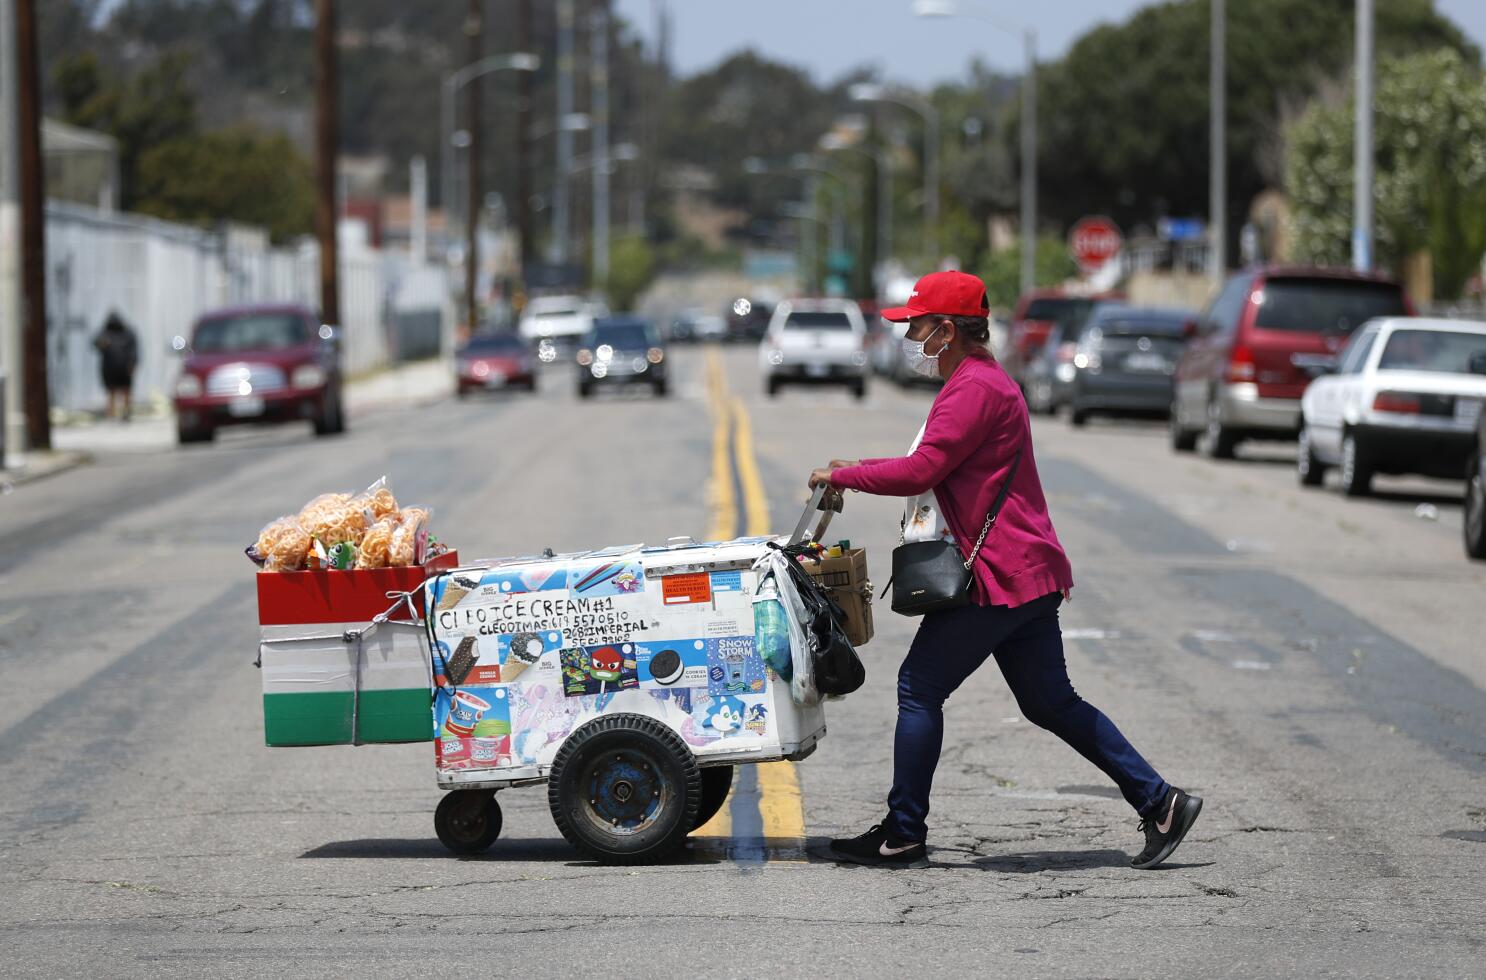 No me queda de otra': San Diego vendor pushes ice cream cart to keep family  afloat - The San Diego Union-Tribune